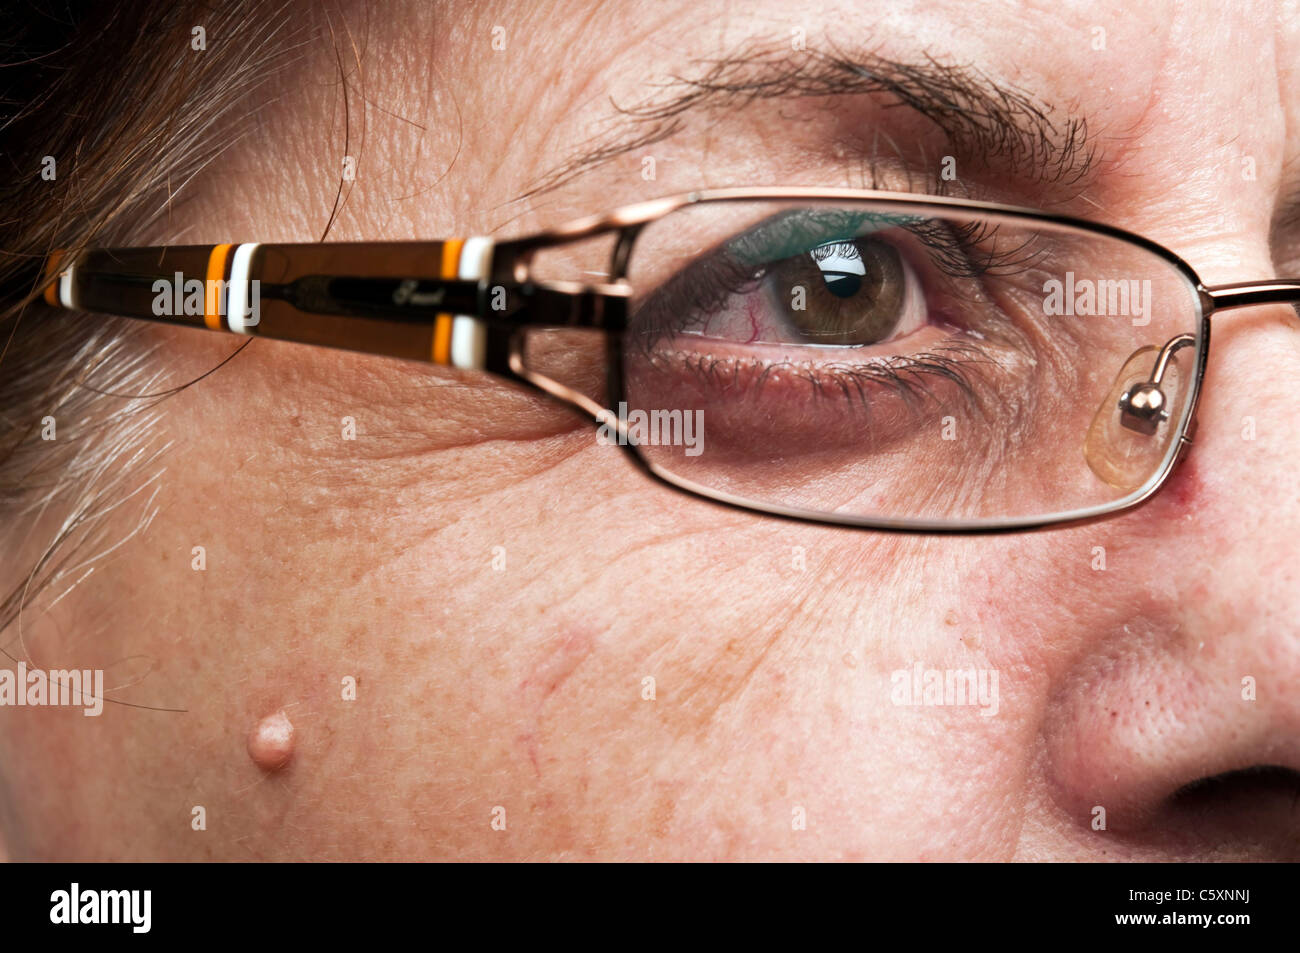 Woman eye glasses close up Stock Photo